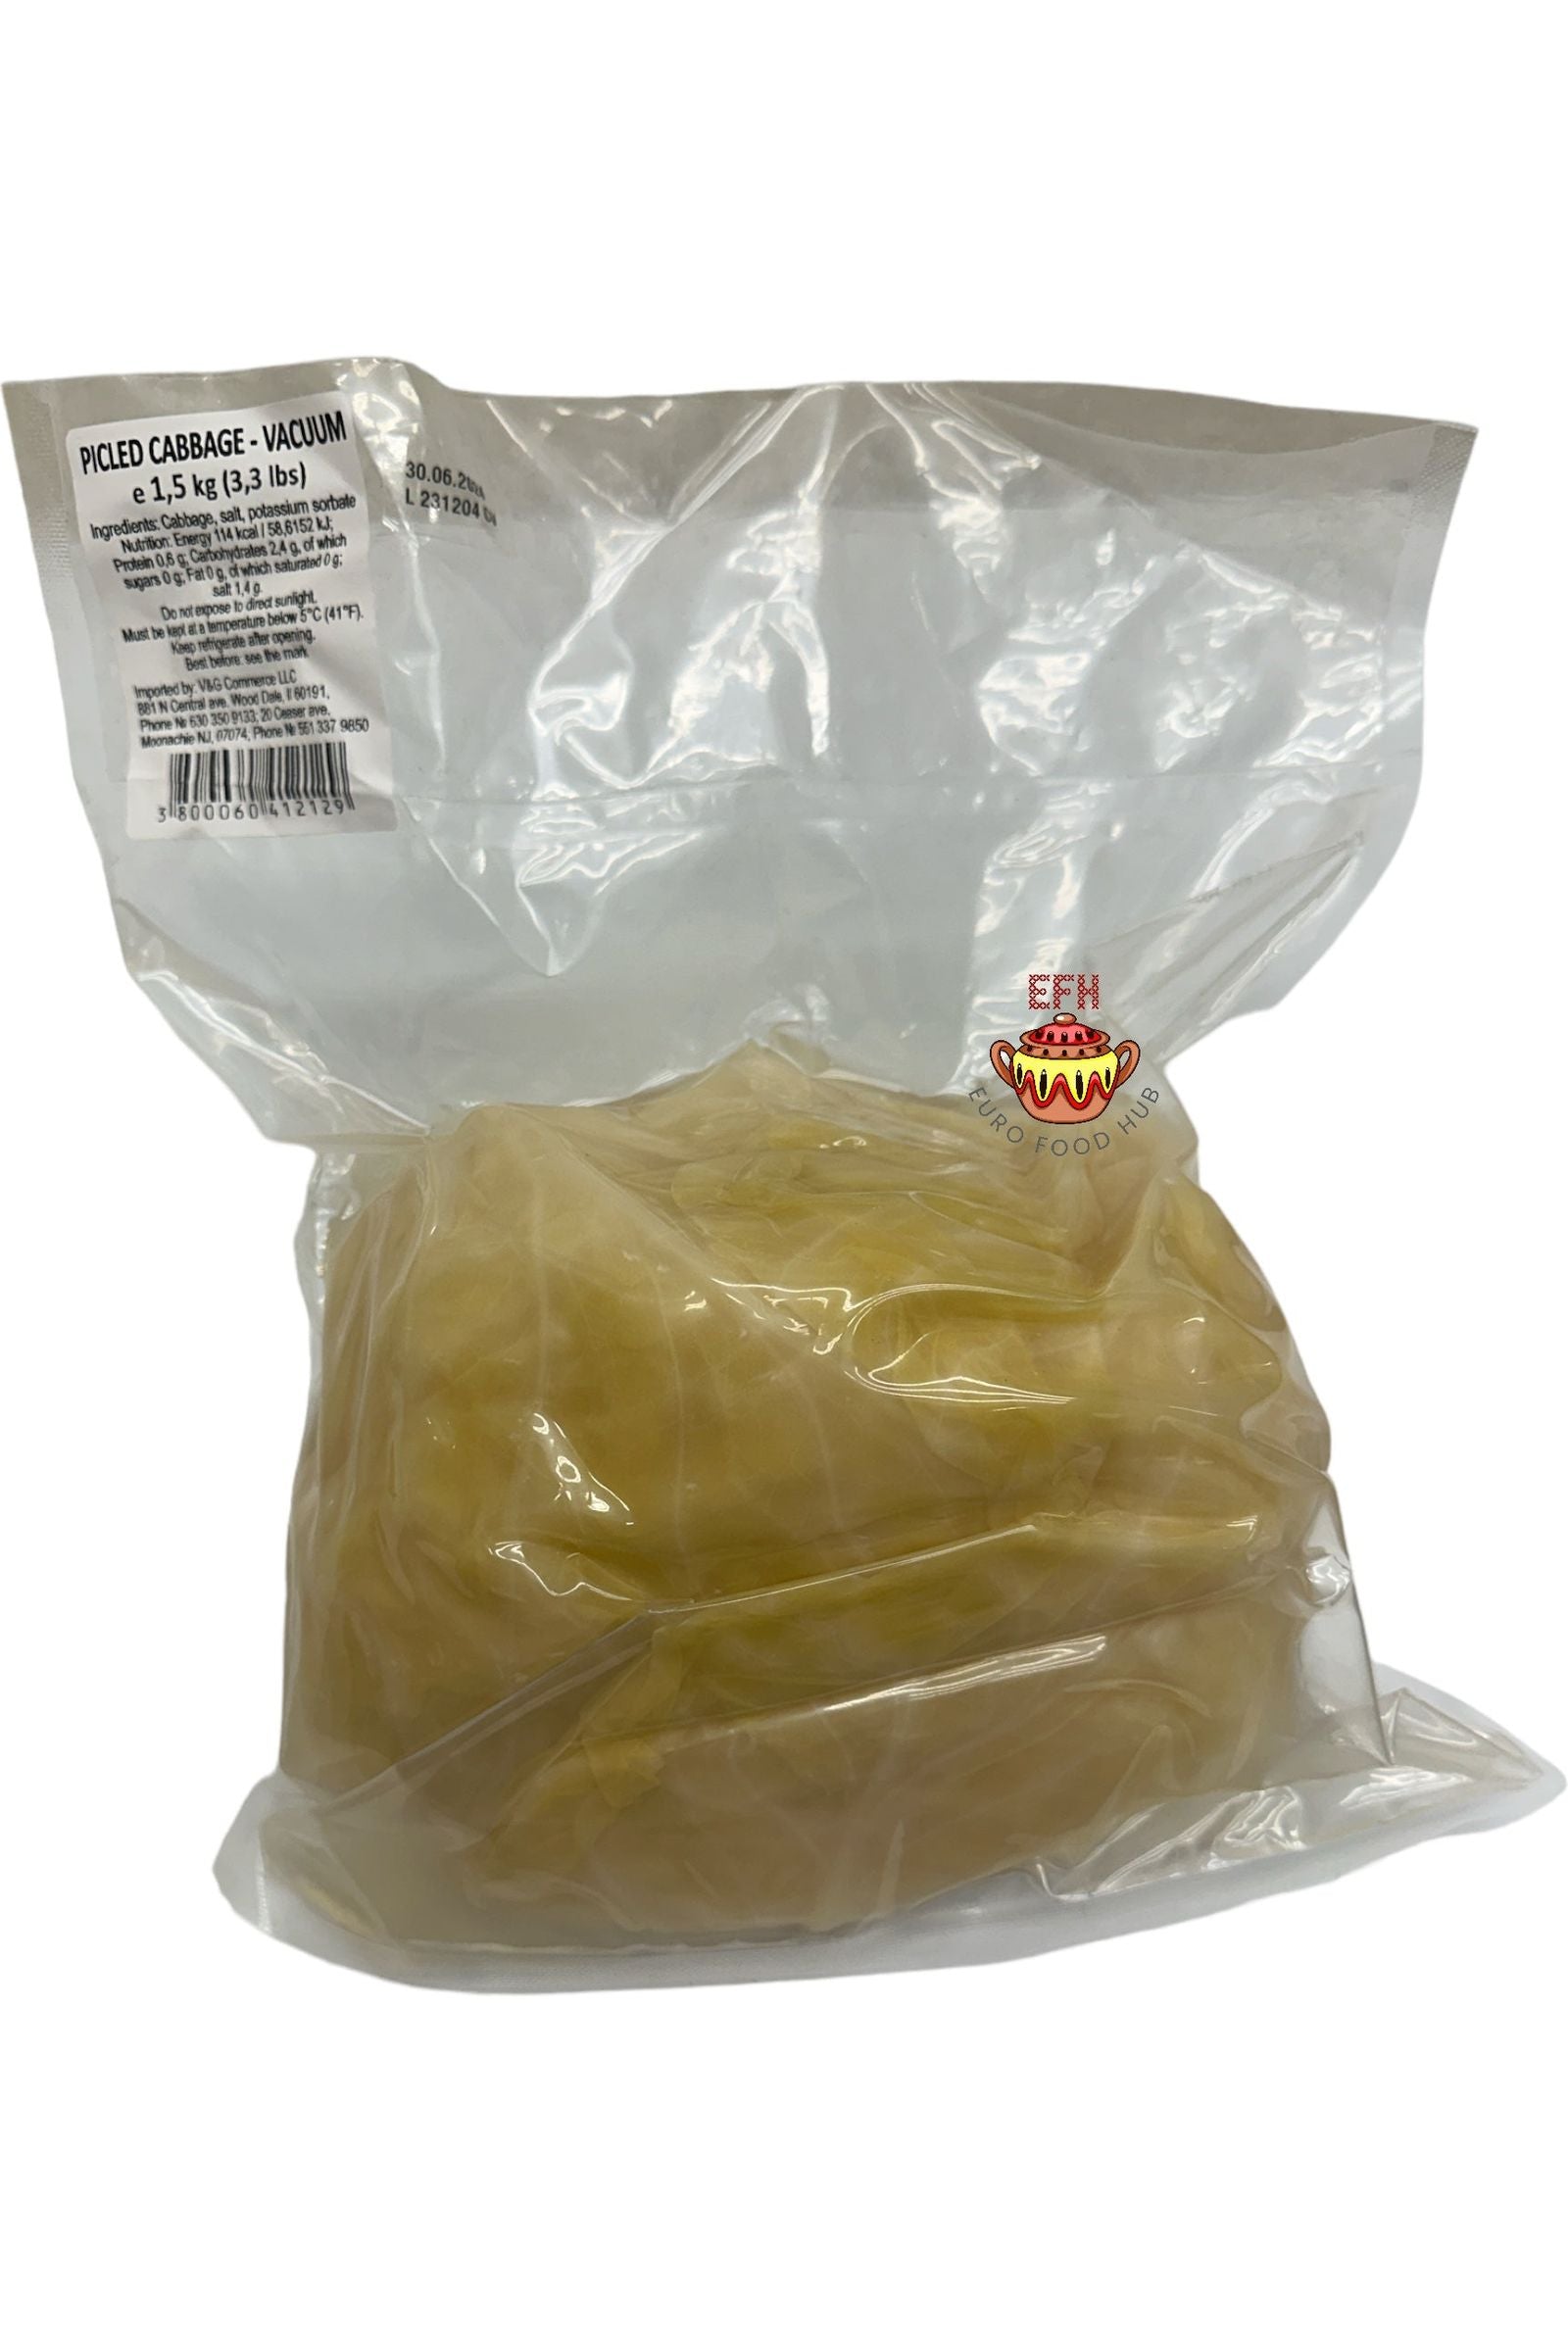 Bulgarian Sour Cabbage Head - Pickled Cabbage - Sauerkraut - 3.3 lbs